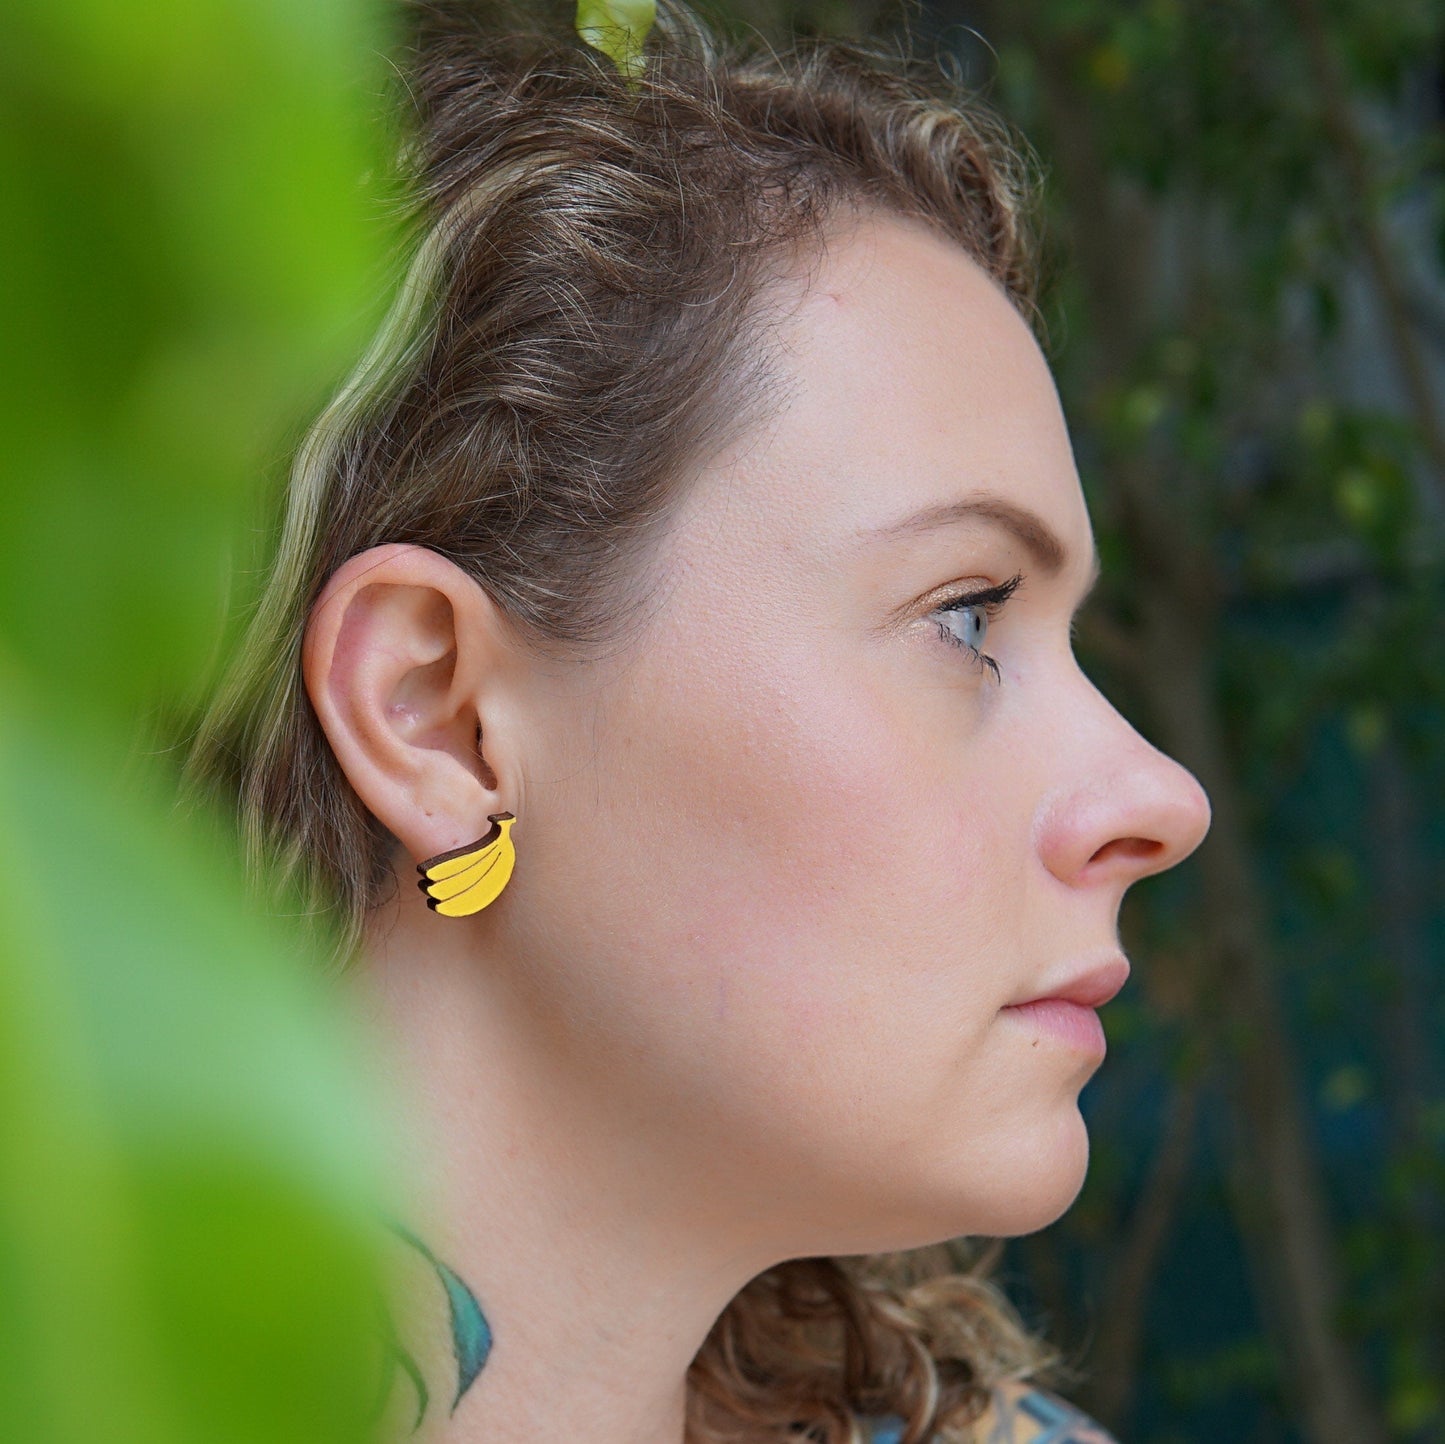 Girl wearing banana earrings